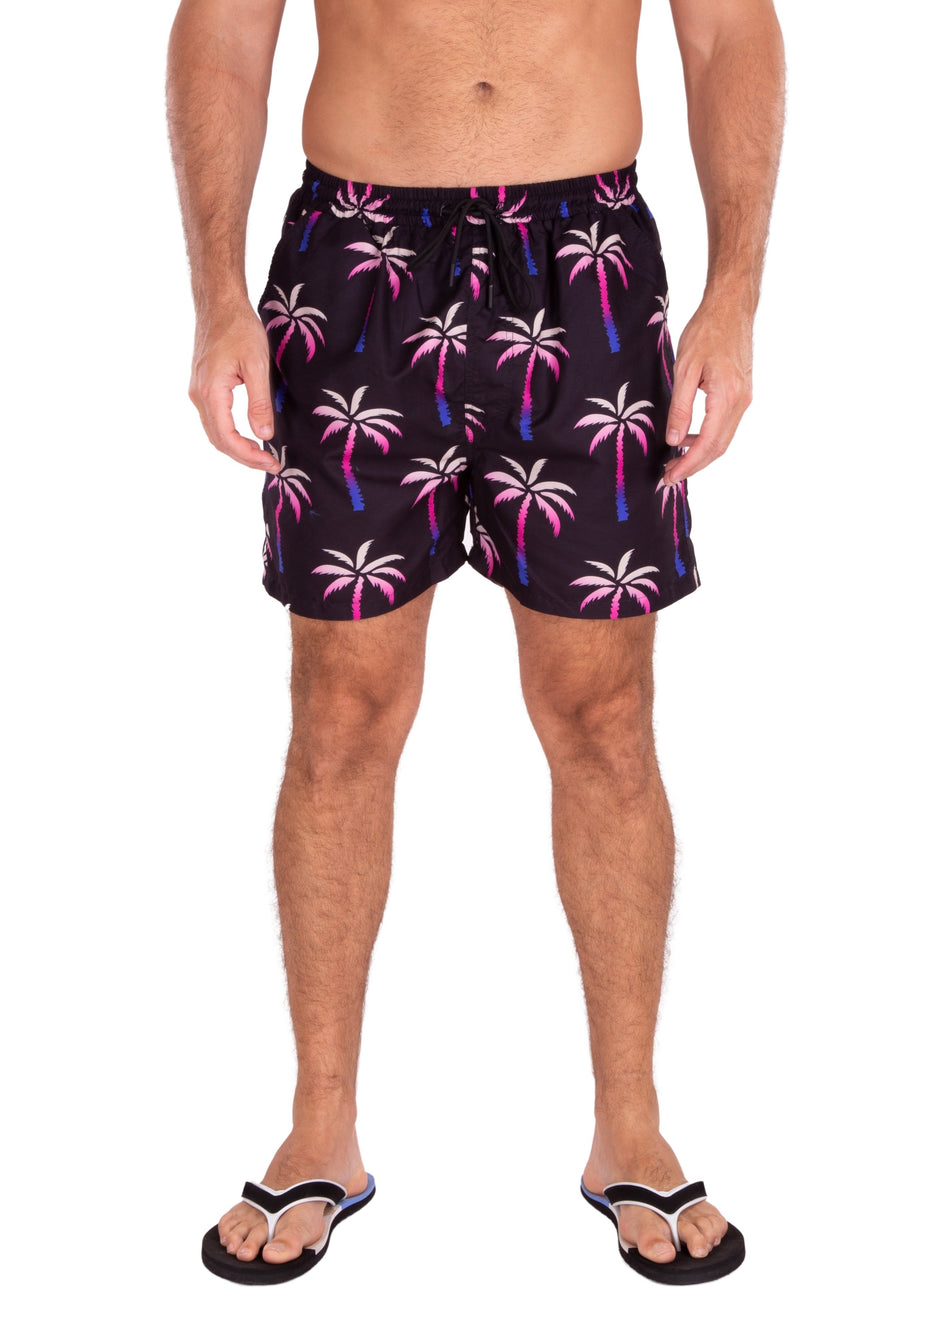 203160 - Black Tropical Print Shorts